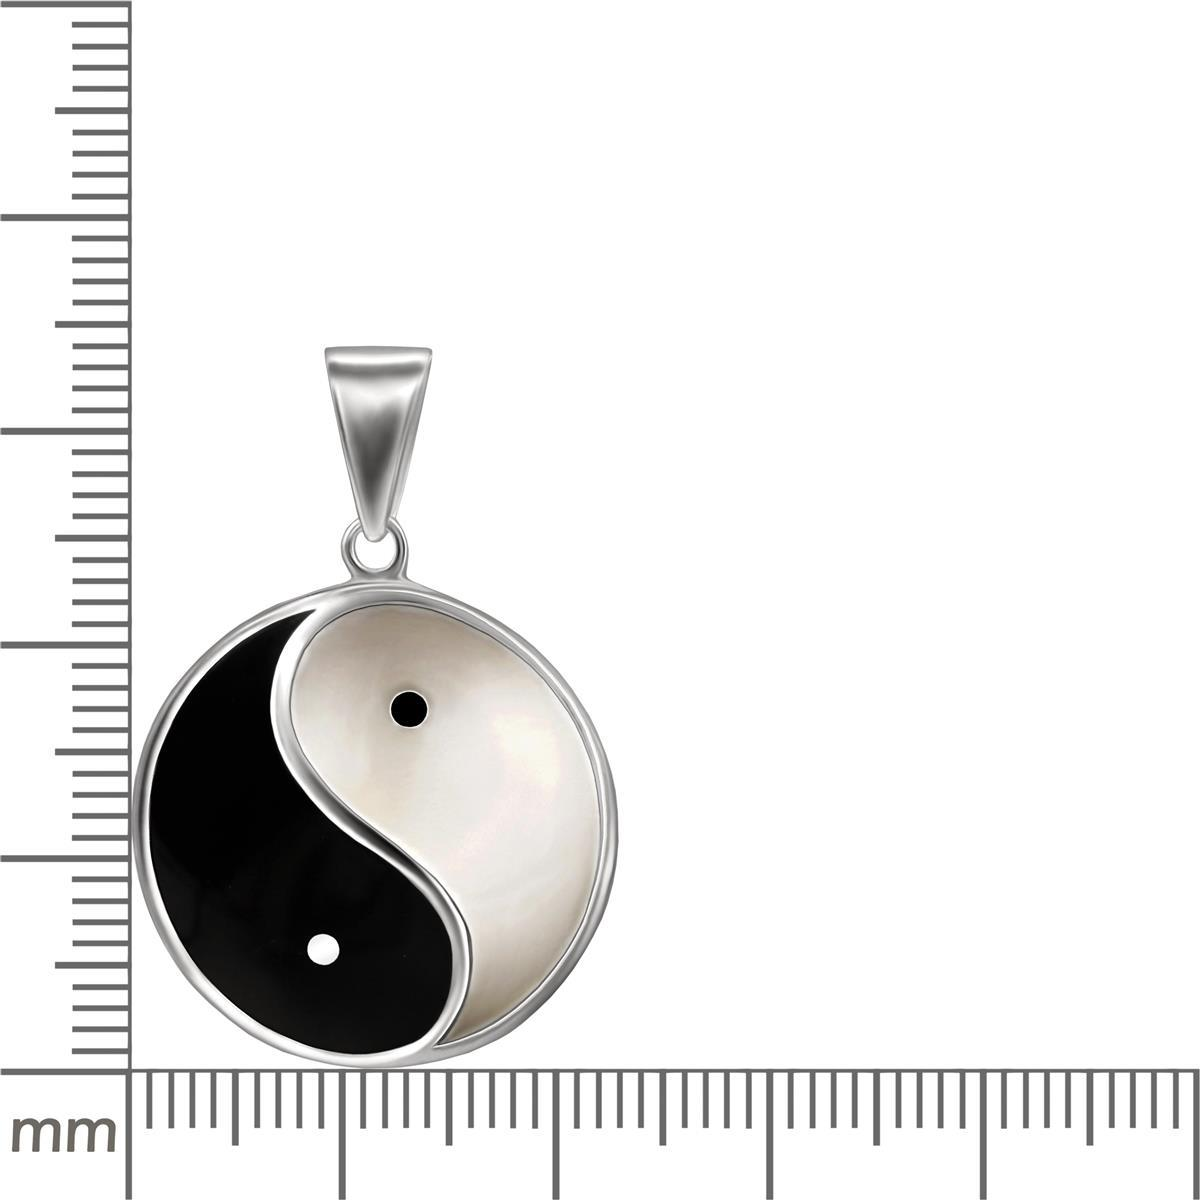 Anhänger Yin Yang 32 mm groß runde nicht geteilte Form Sterling Silber 925